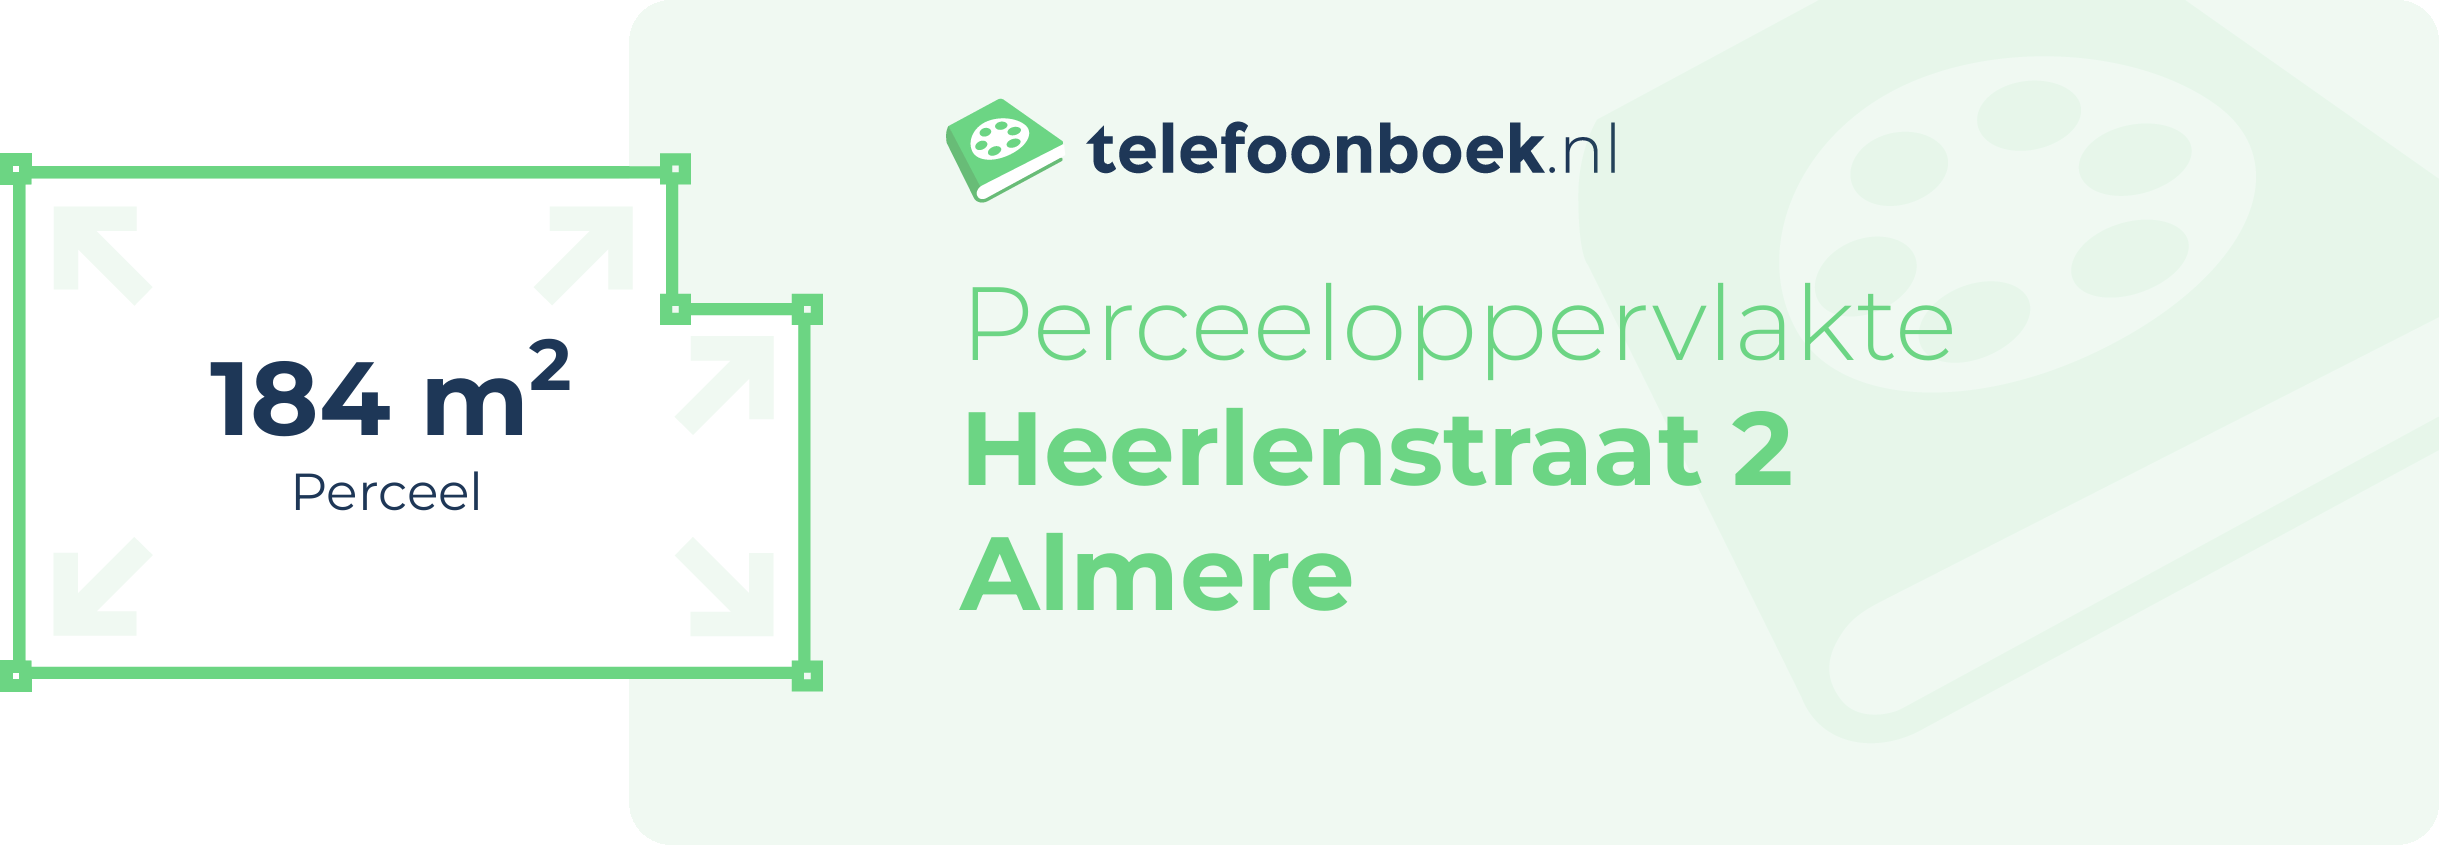 Perceeloppervlakte Heerlenstraat 2 Almere